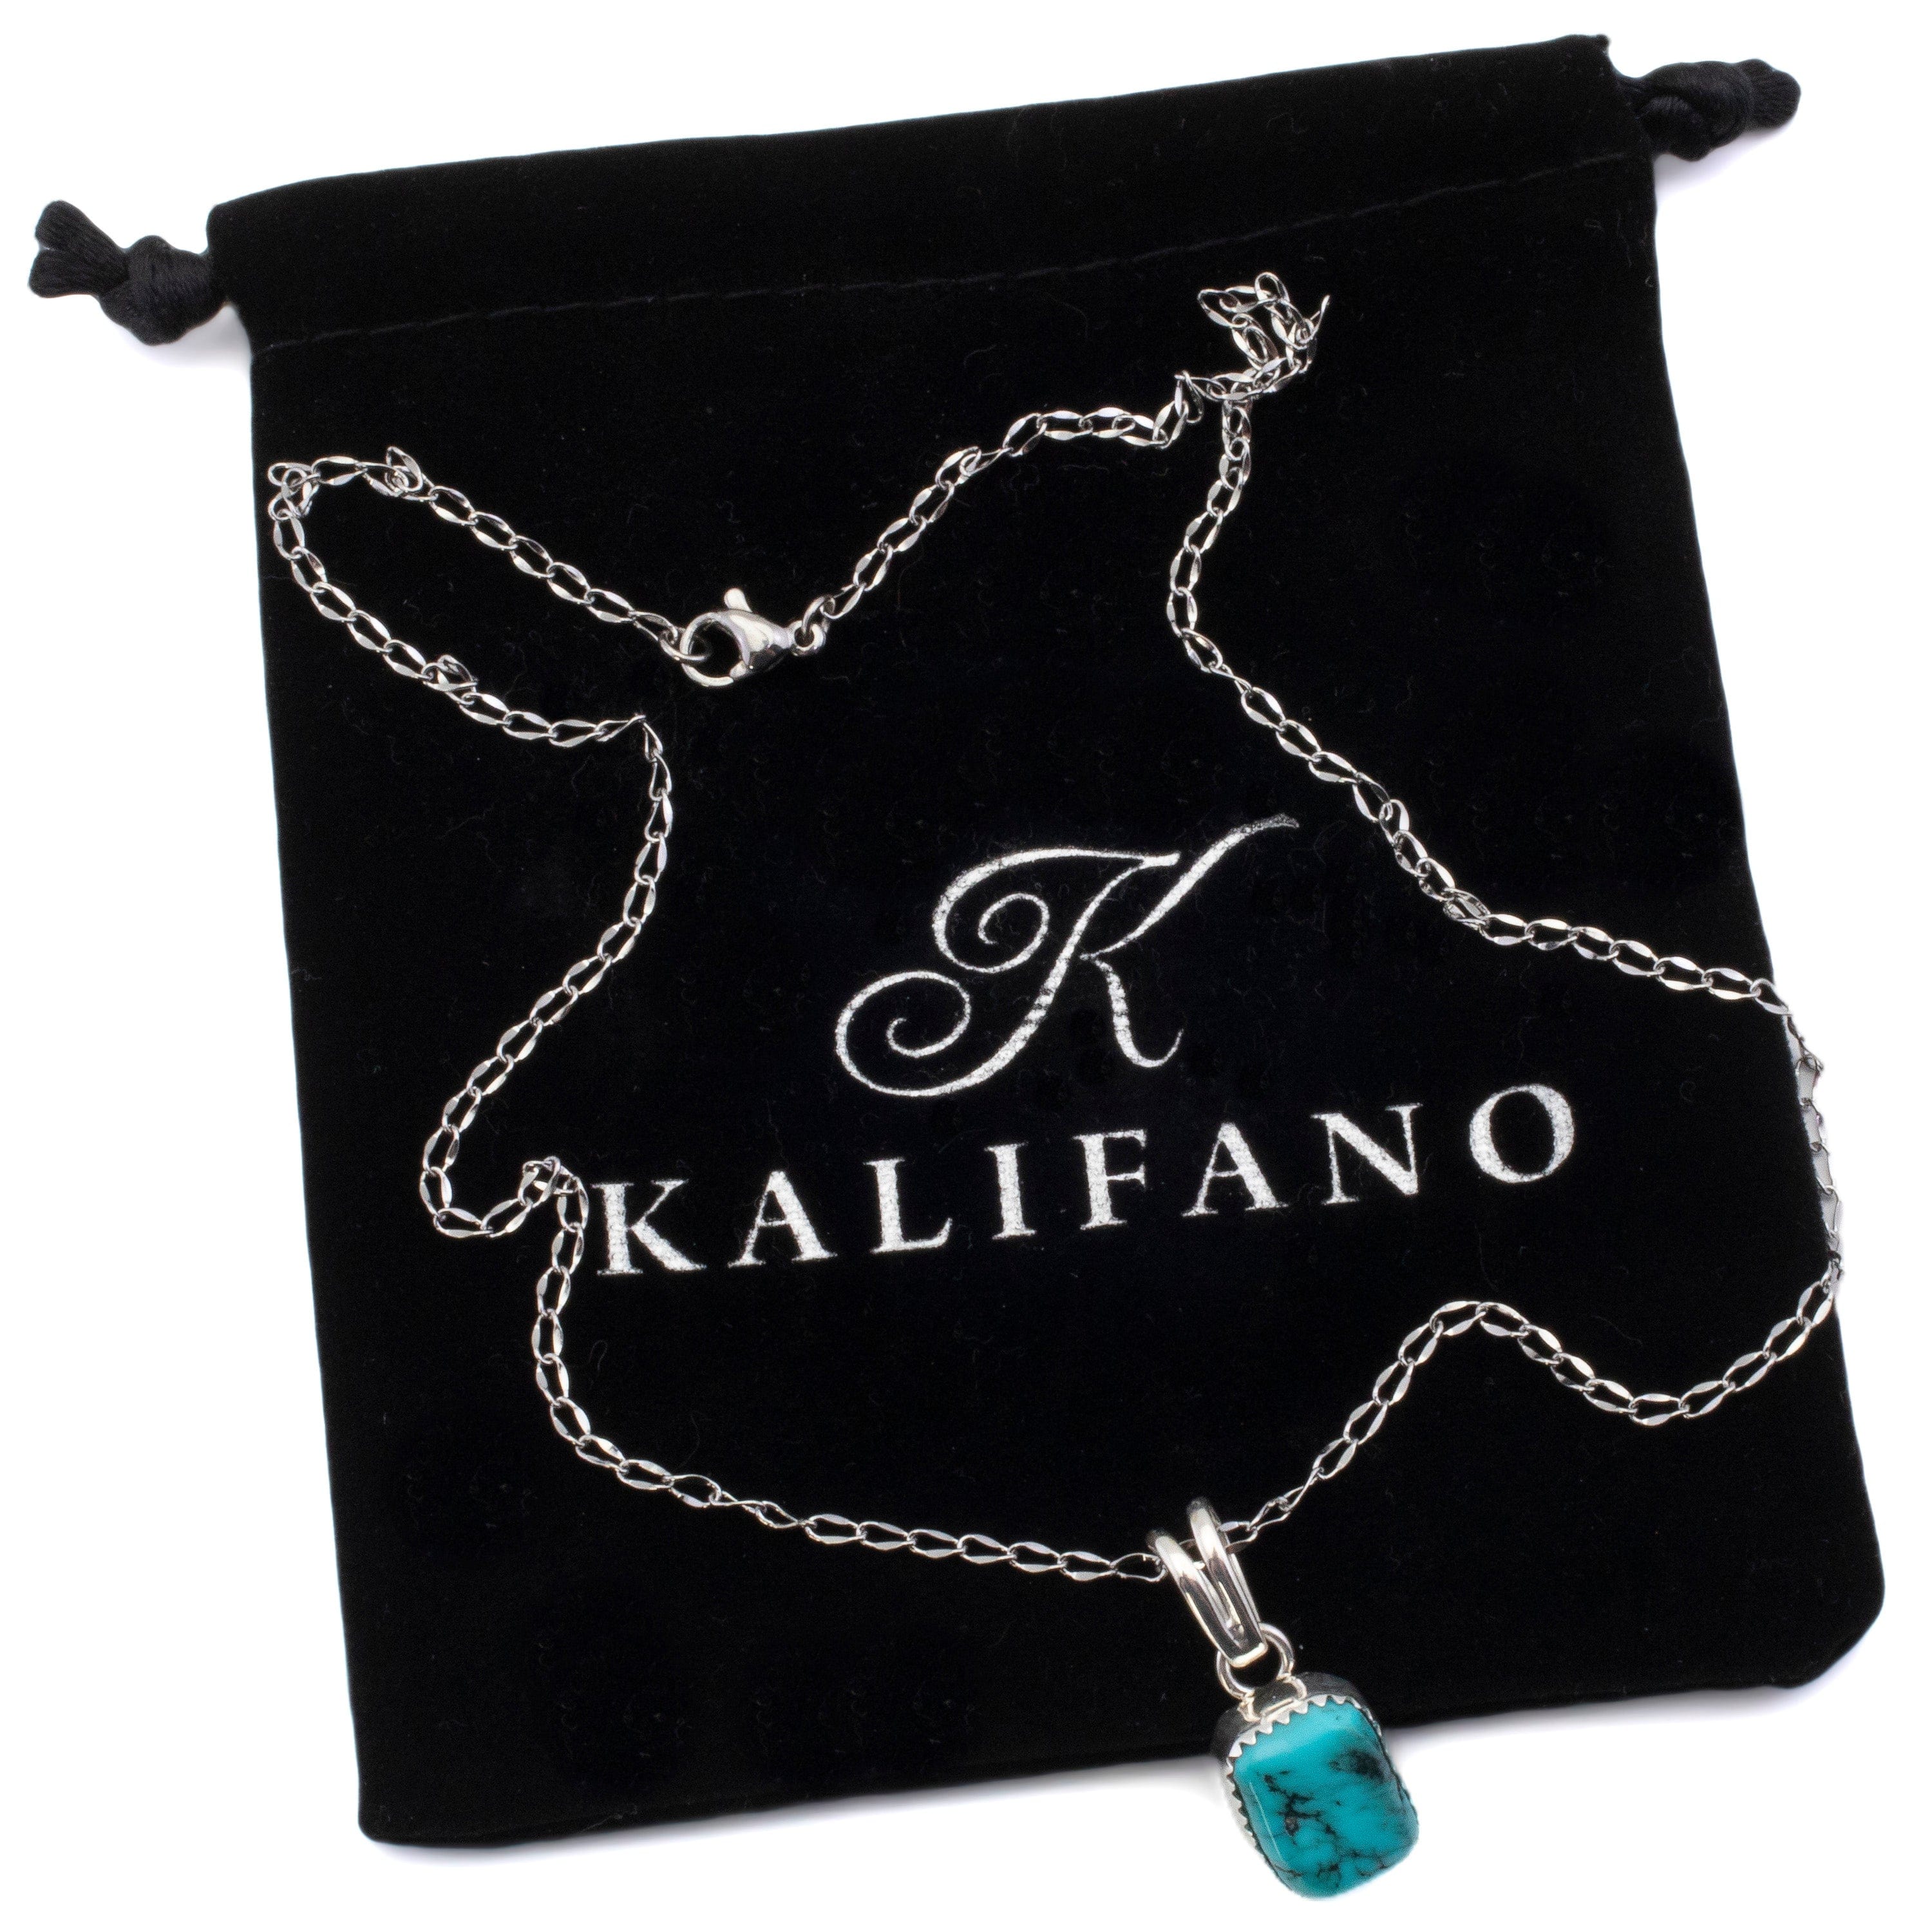 Kalifano Southwest Silver Jewelry Sleeping Beauty Turquoise USA Handmade 925 Sterling Silver Pendant NMN.0028.TQ